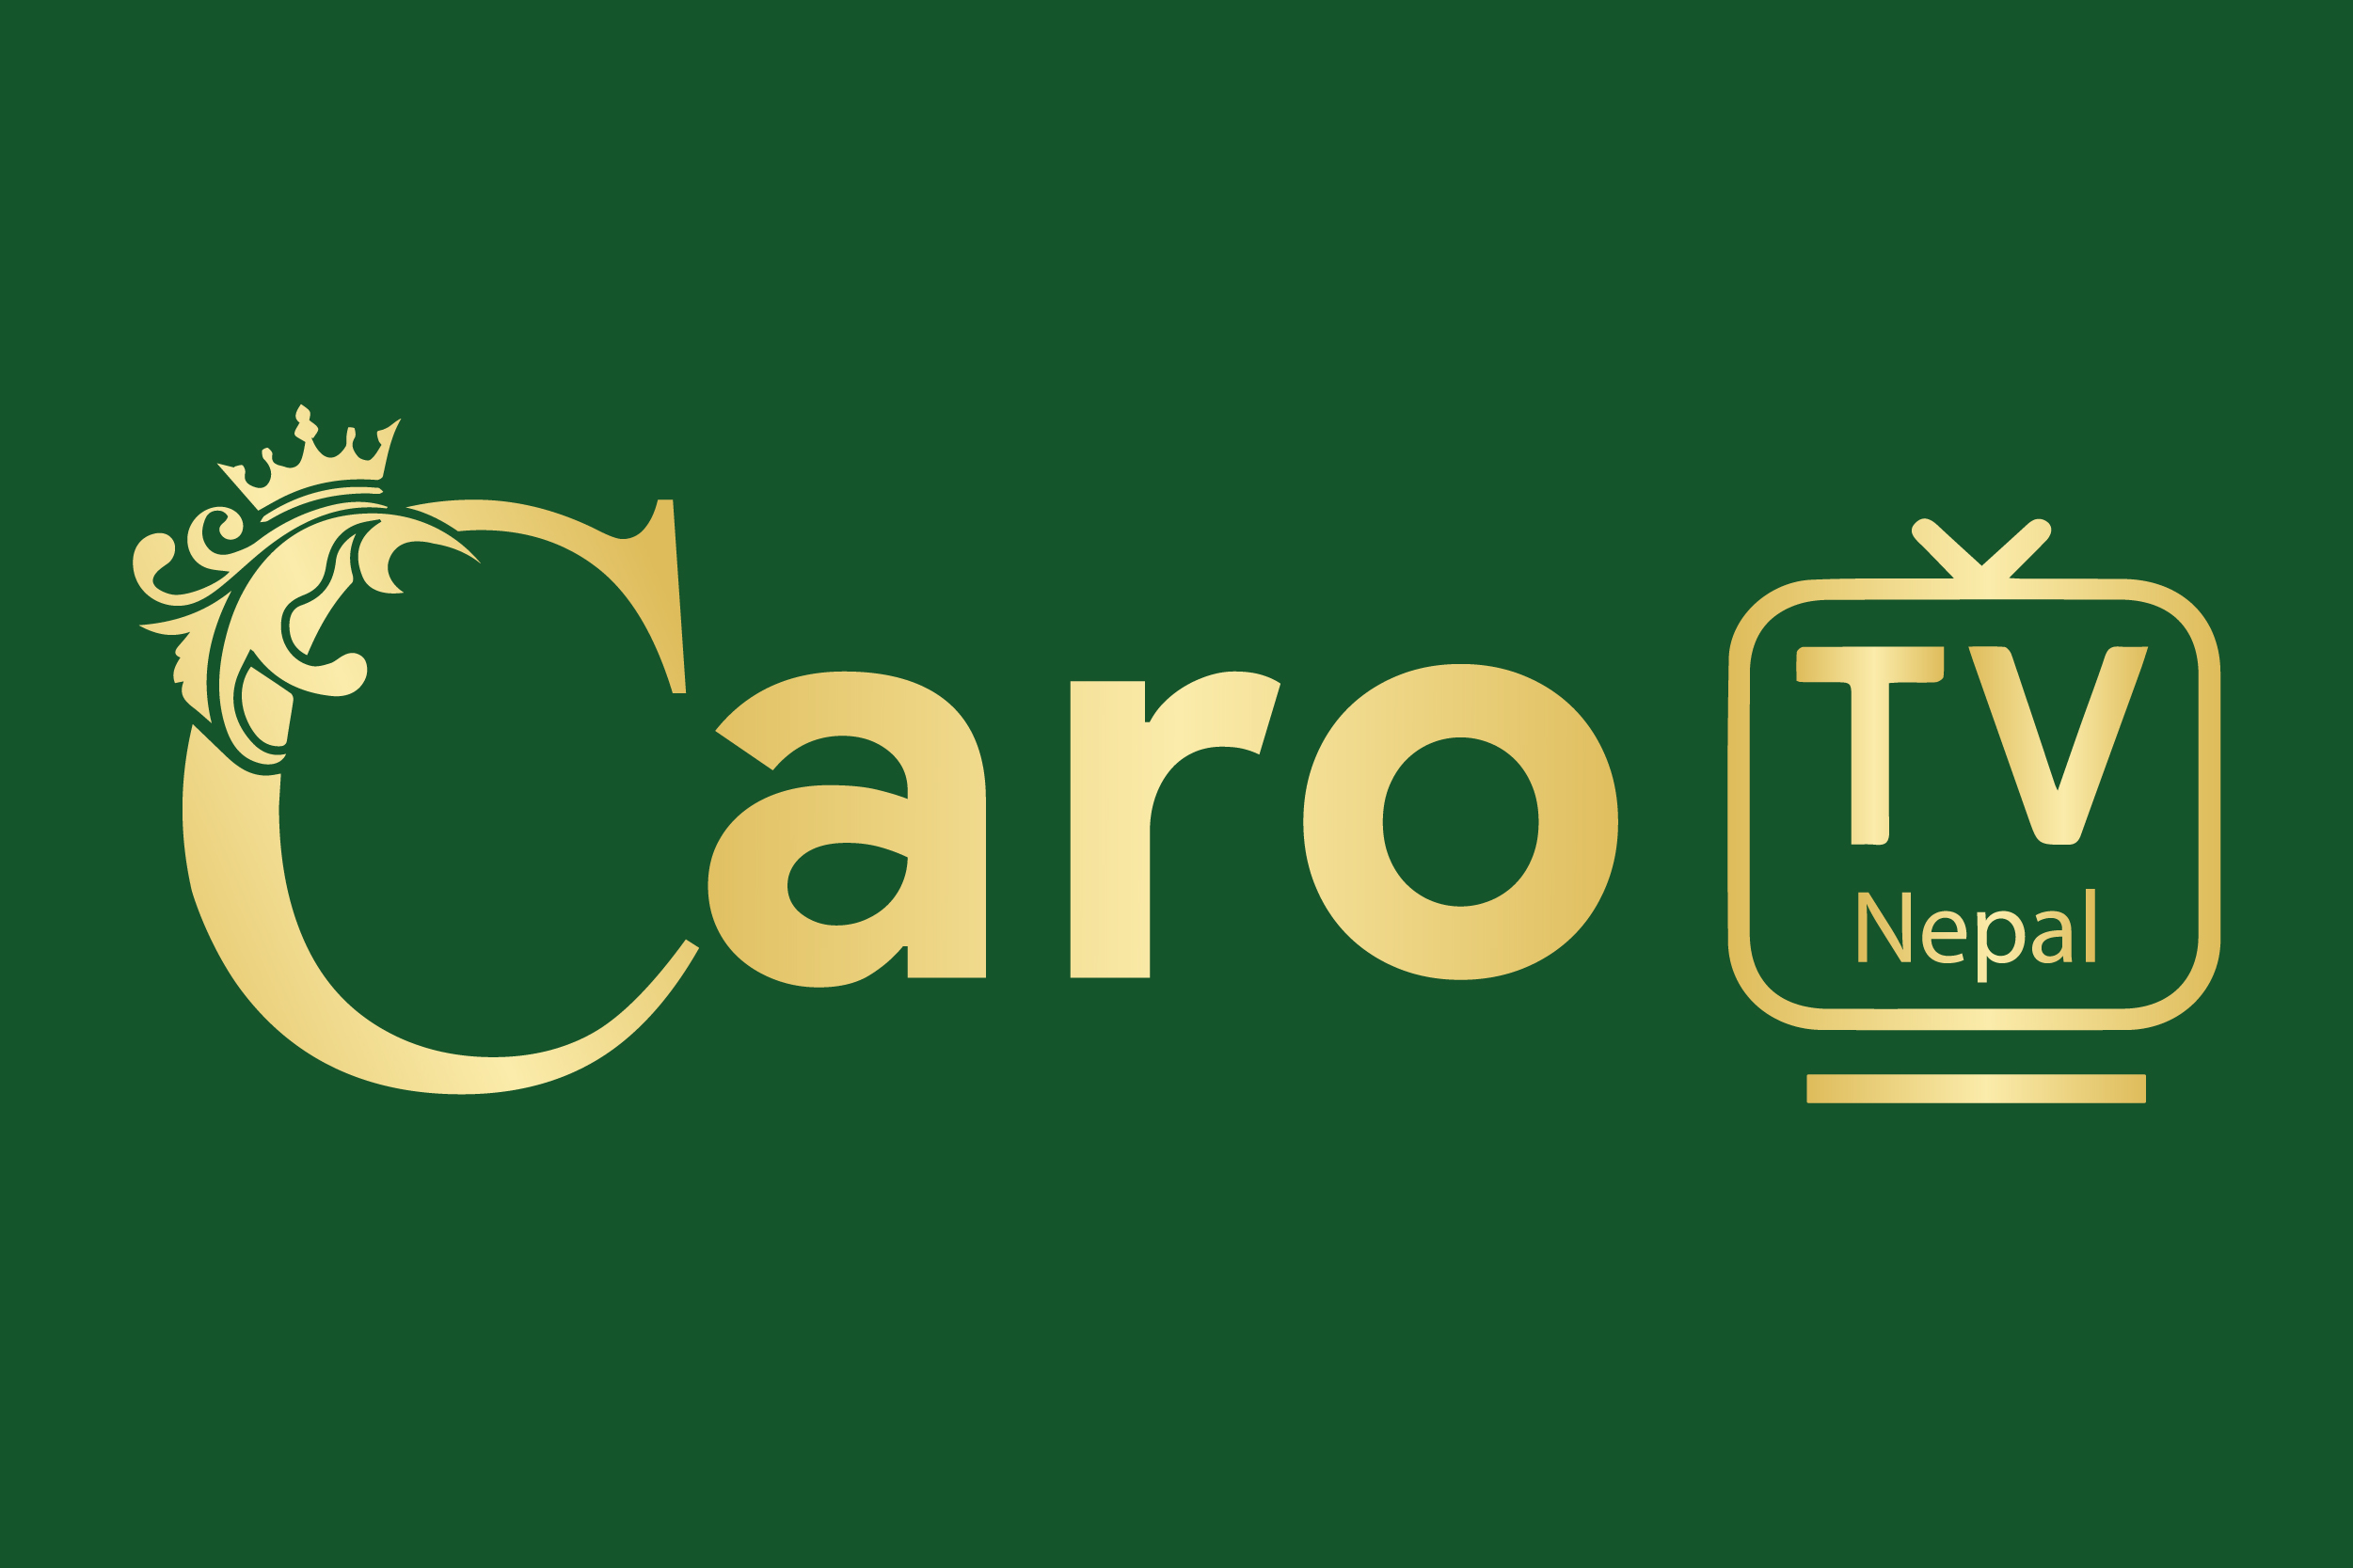 Caro TV Nepal leading IPTV service provider in operation